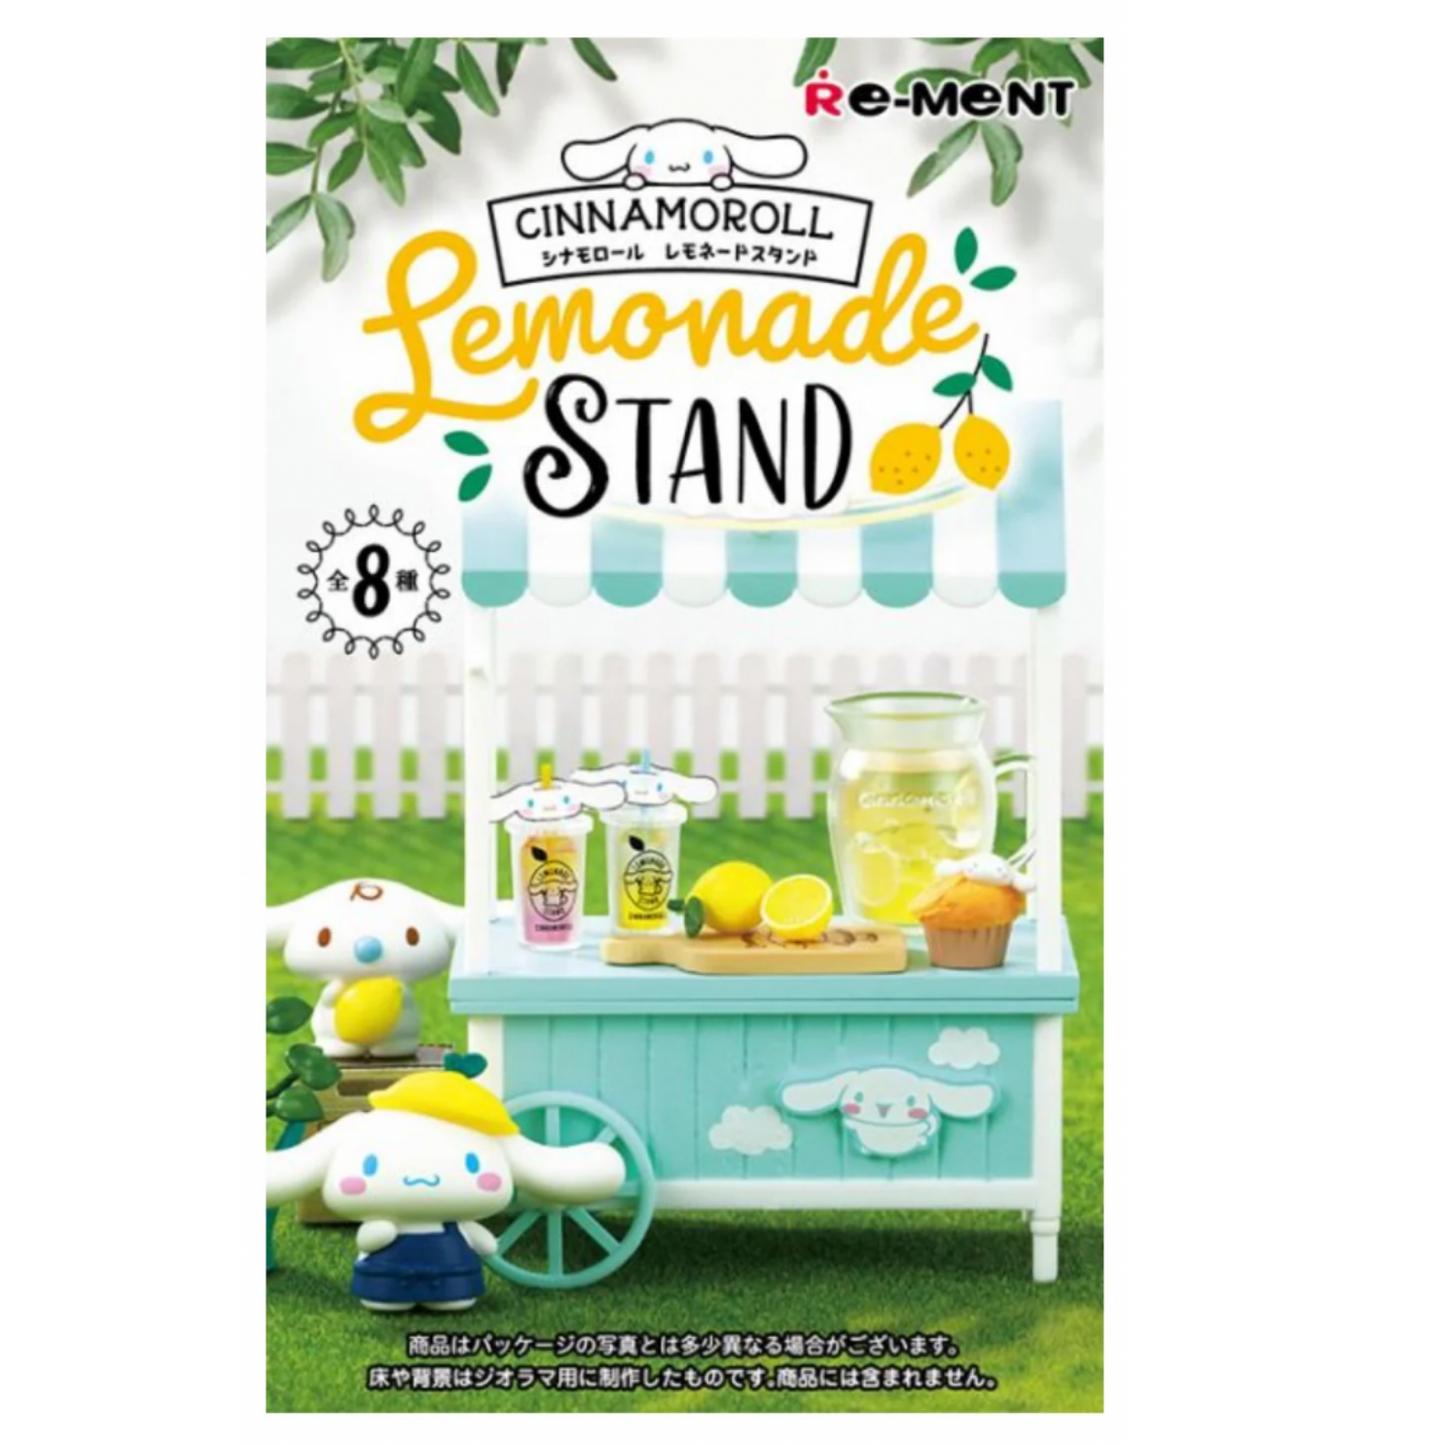 【New】re-Ment: Sanrio Characters Cinnamorll Lemonade Stand Series Blind Box